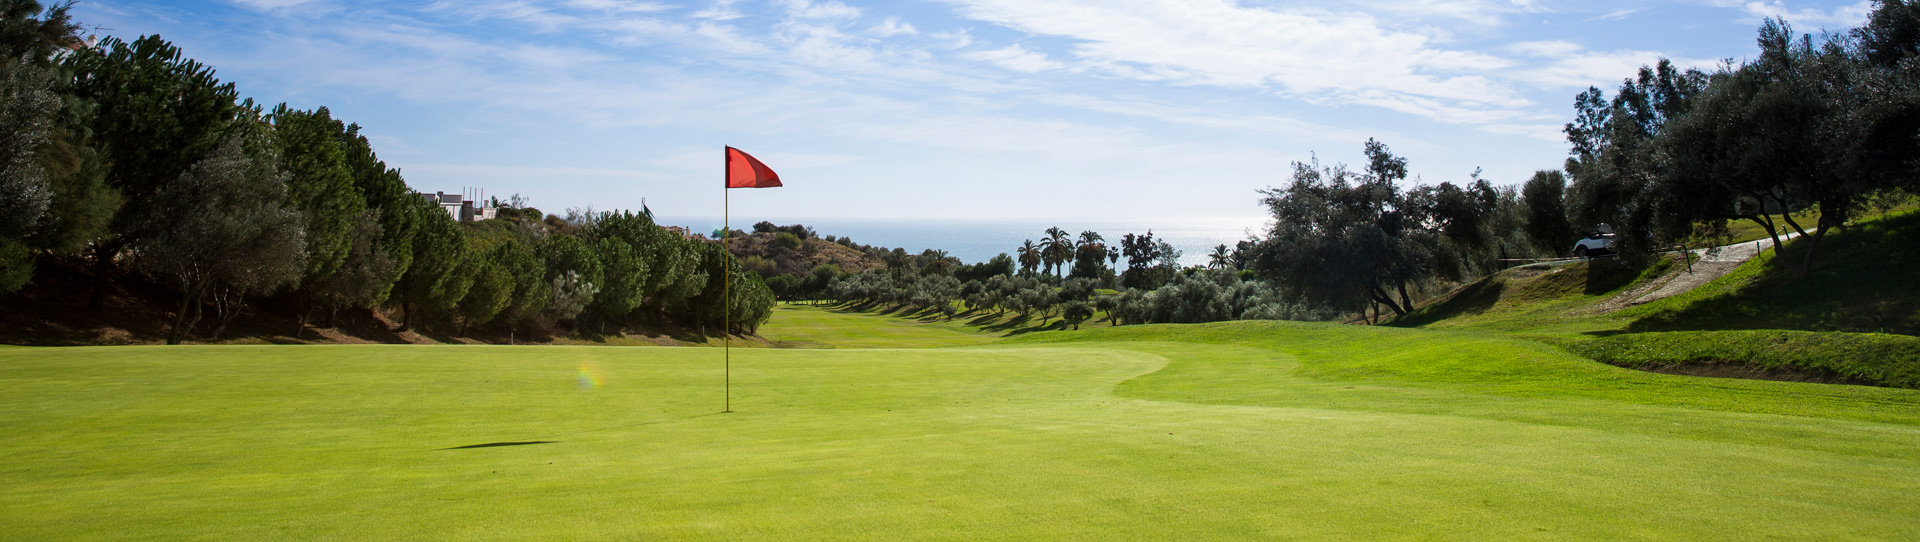 Spain golf courses - Añoreta Golf course - Photo 2